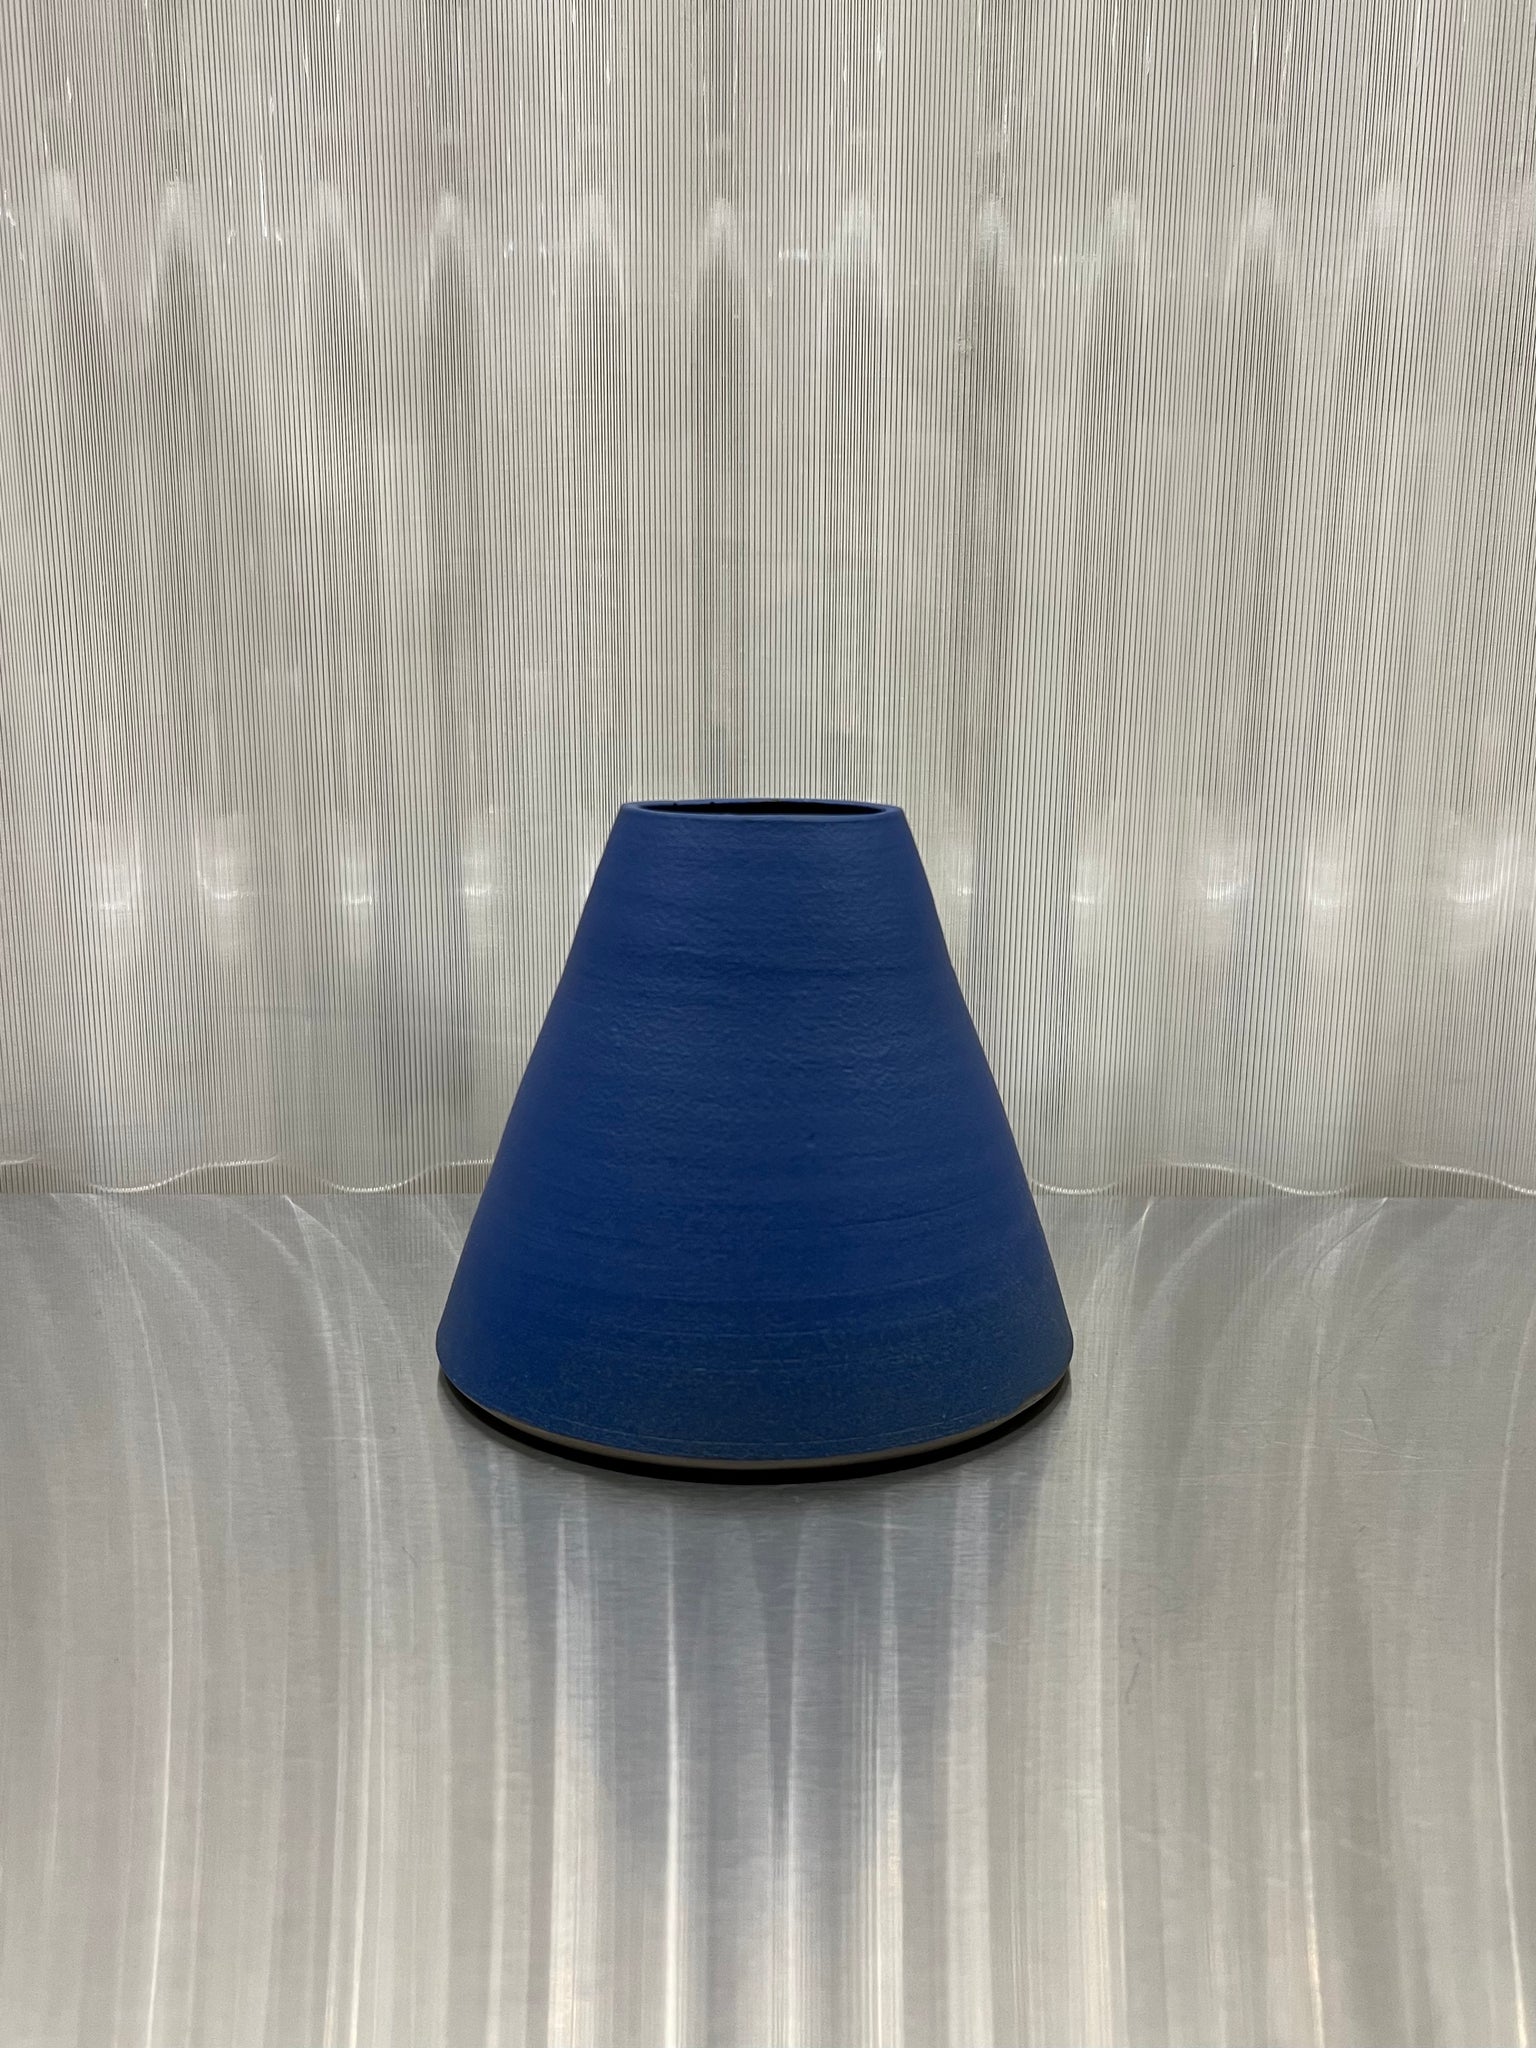 Cone shape vase in blue by Hap Ceramics